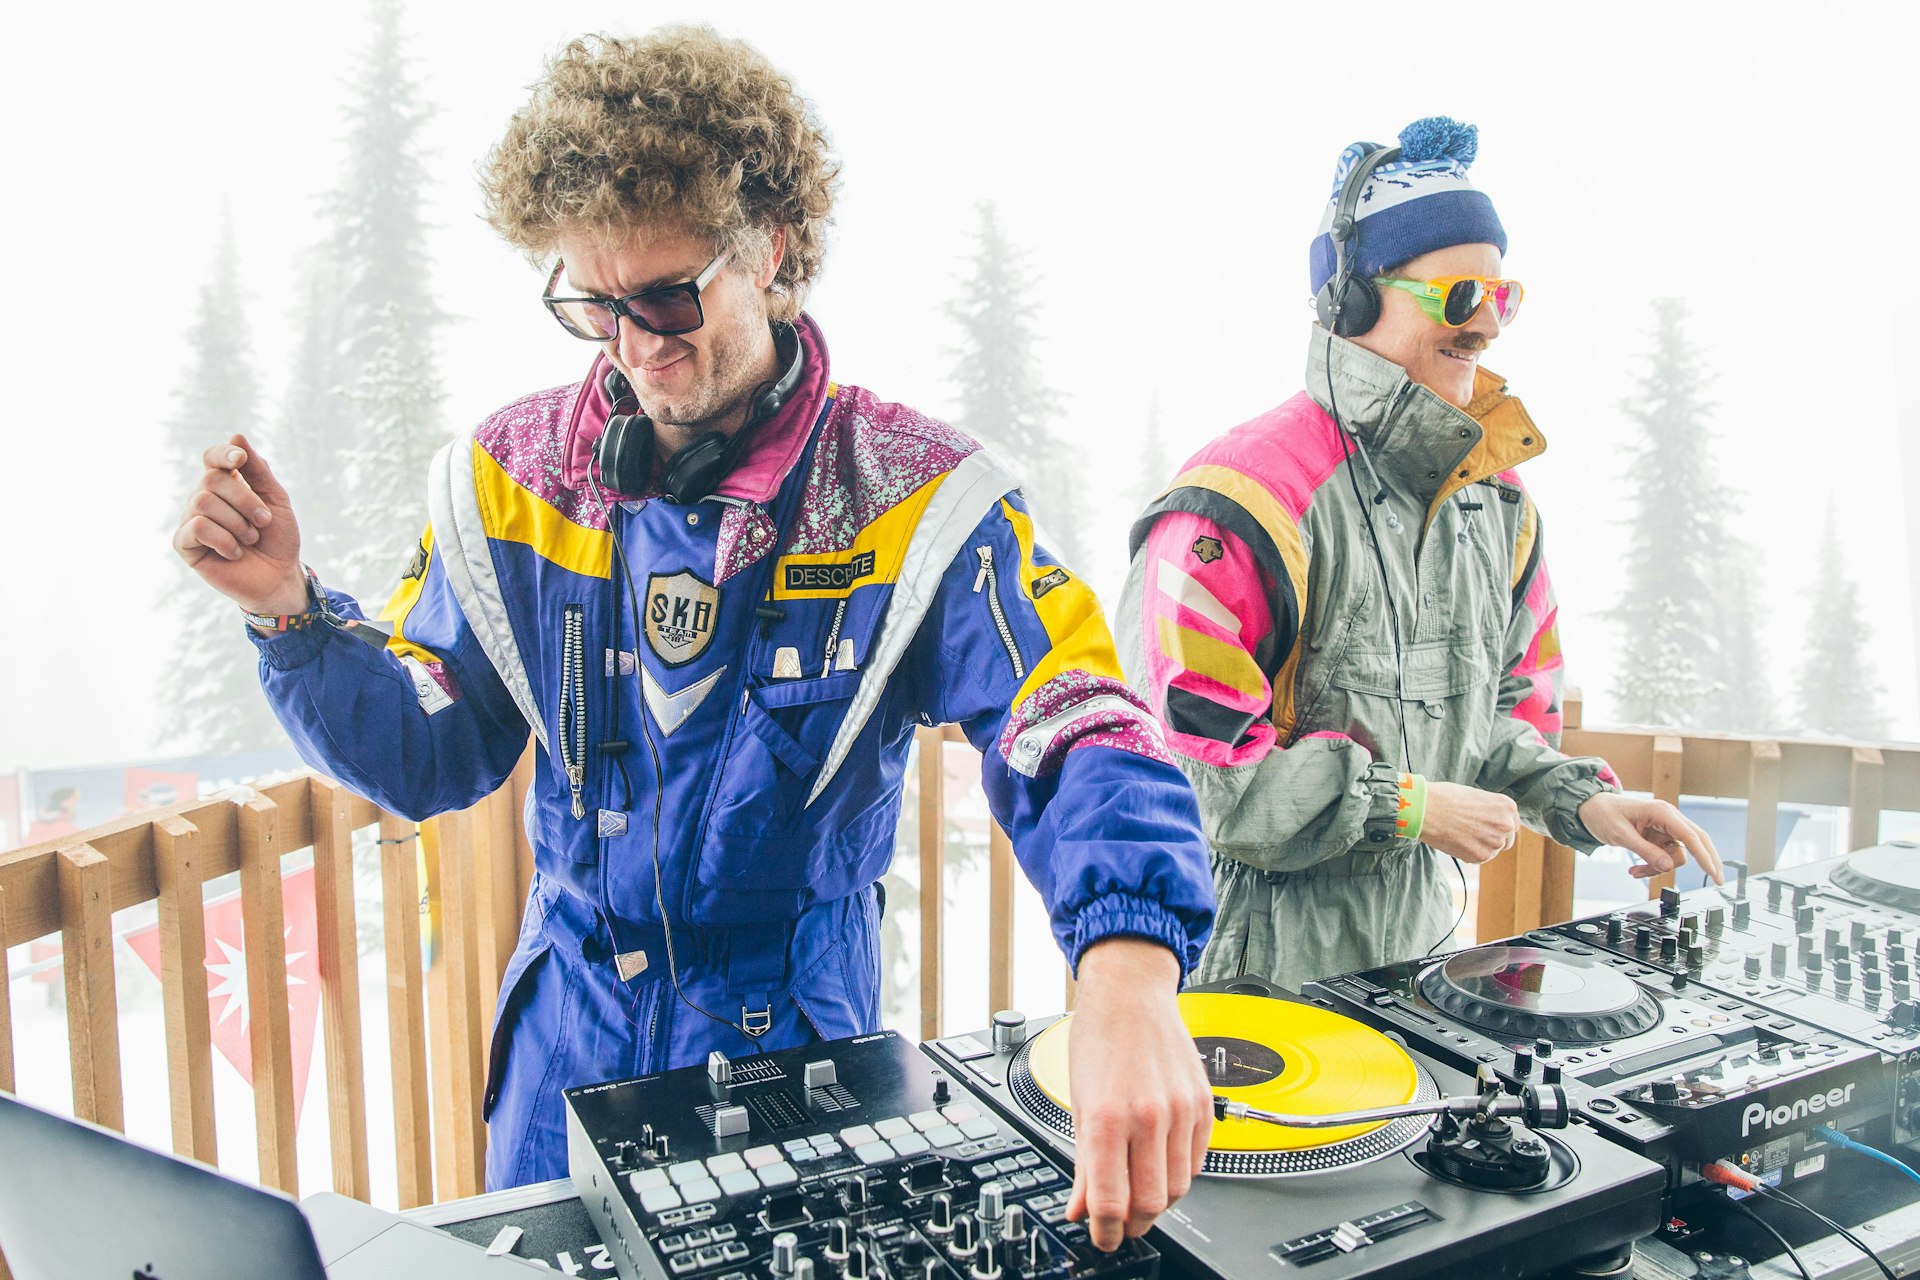 SkiiTour performing a DJ set